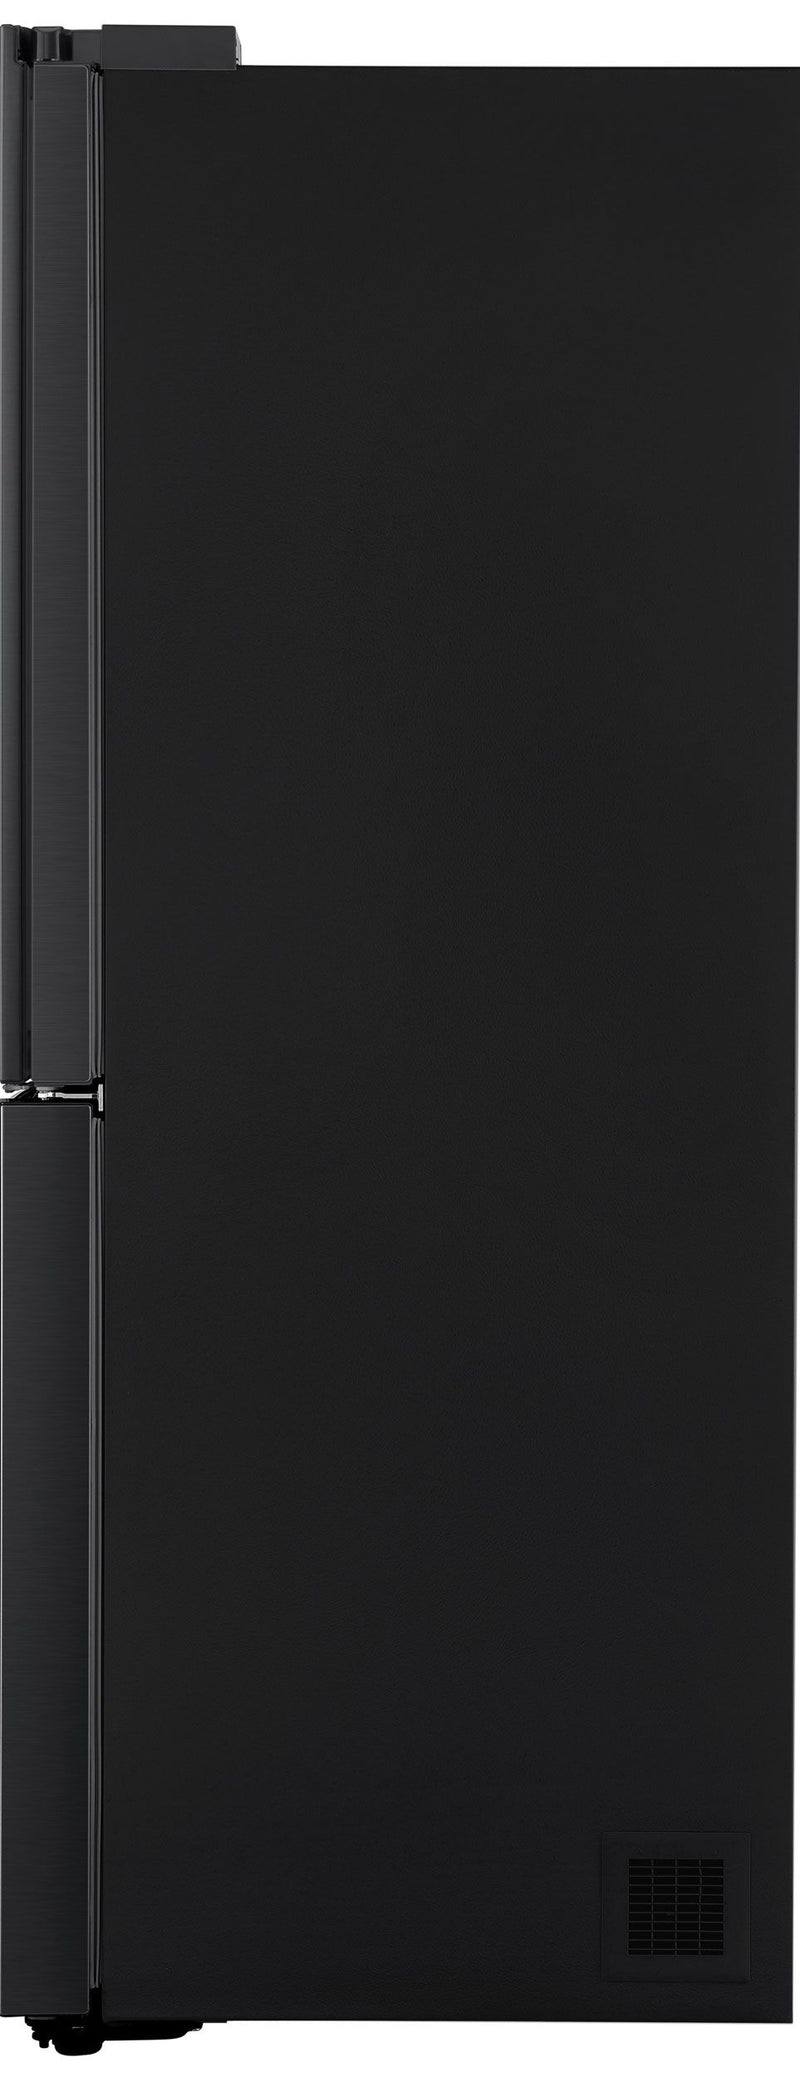 LG French Door Refrigerator 508L GF-V570MBLC